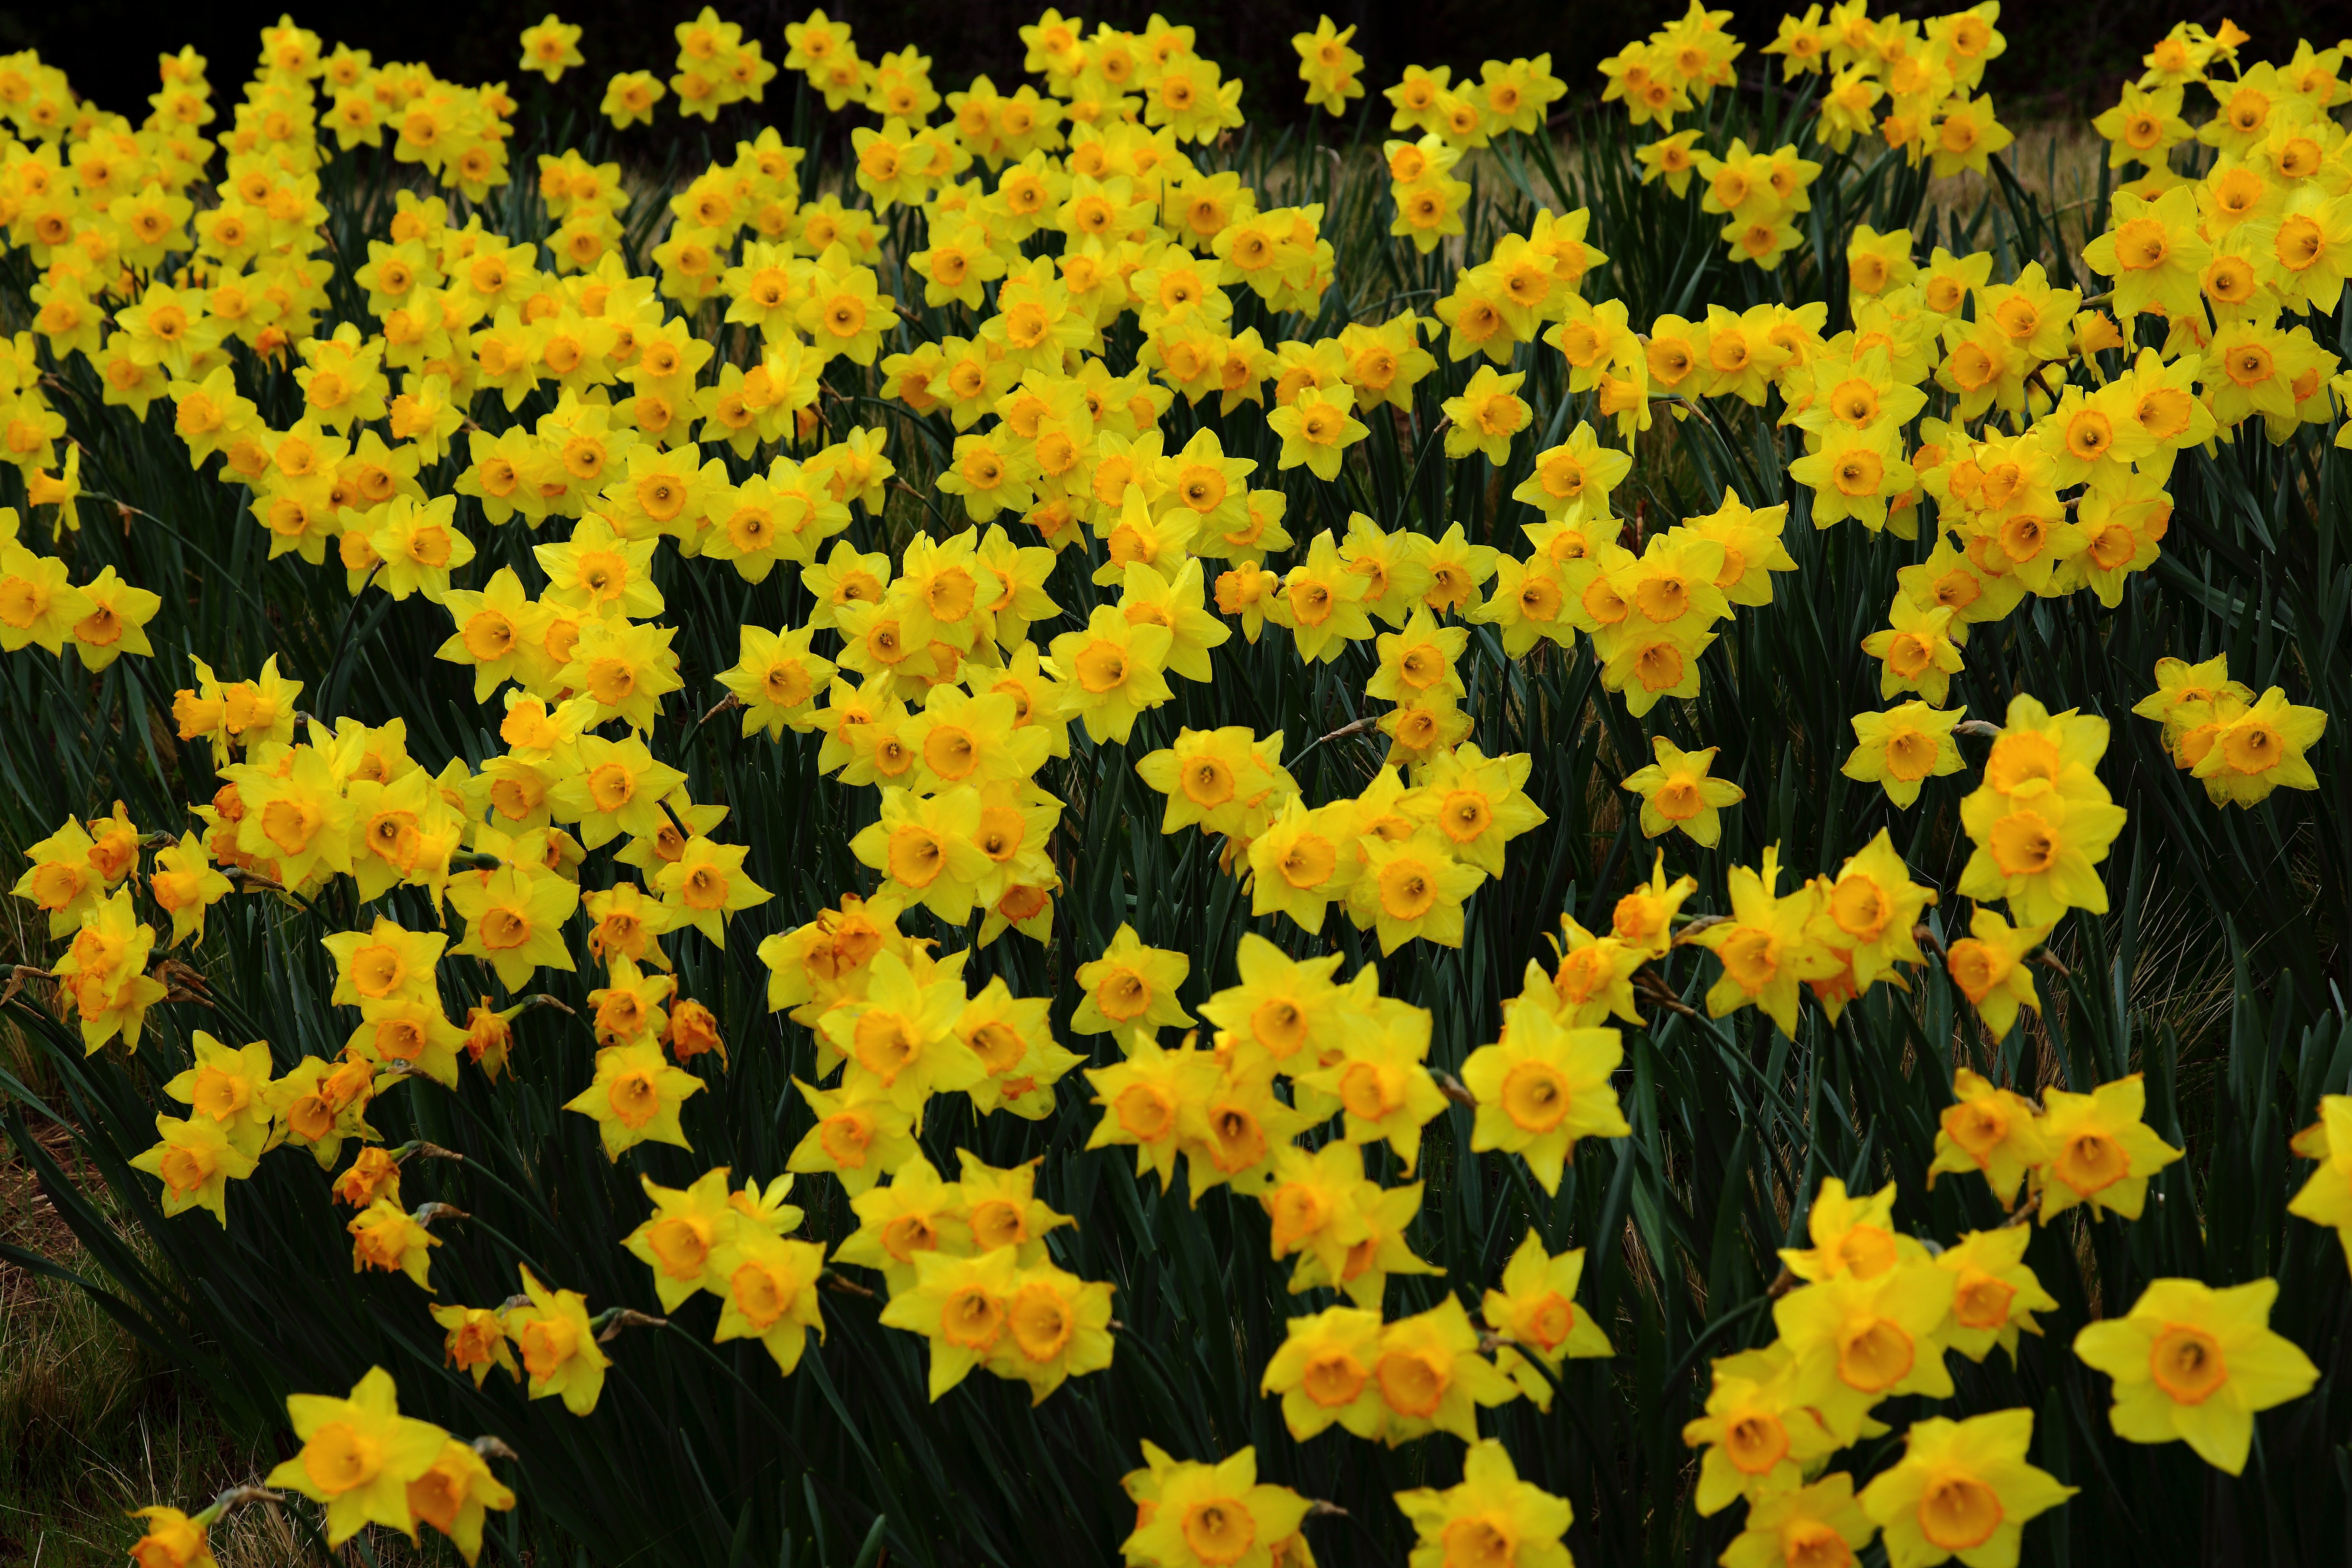 File:Daffodils - West Virginia - ForestWander.jpg - Wikimedia Commons